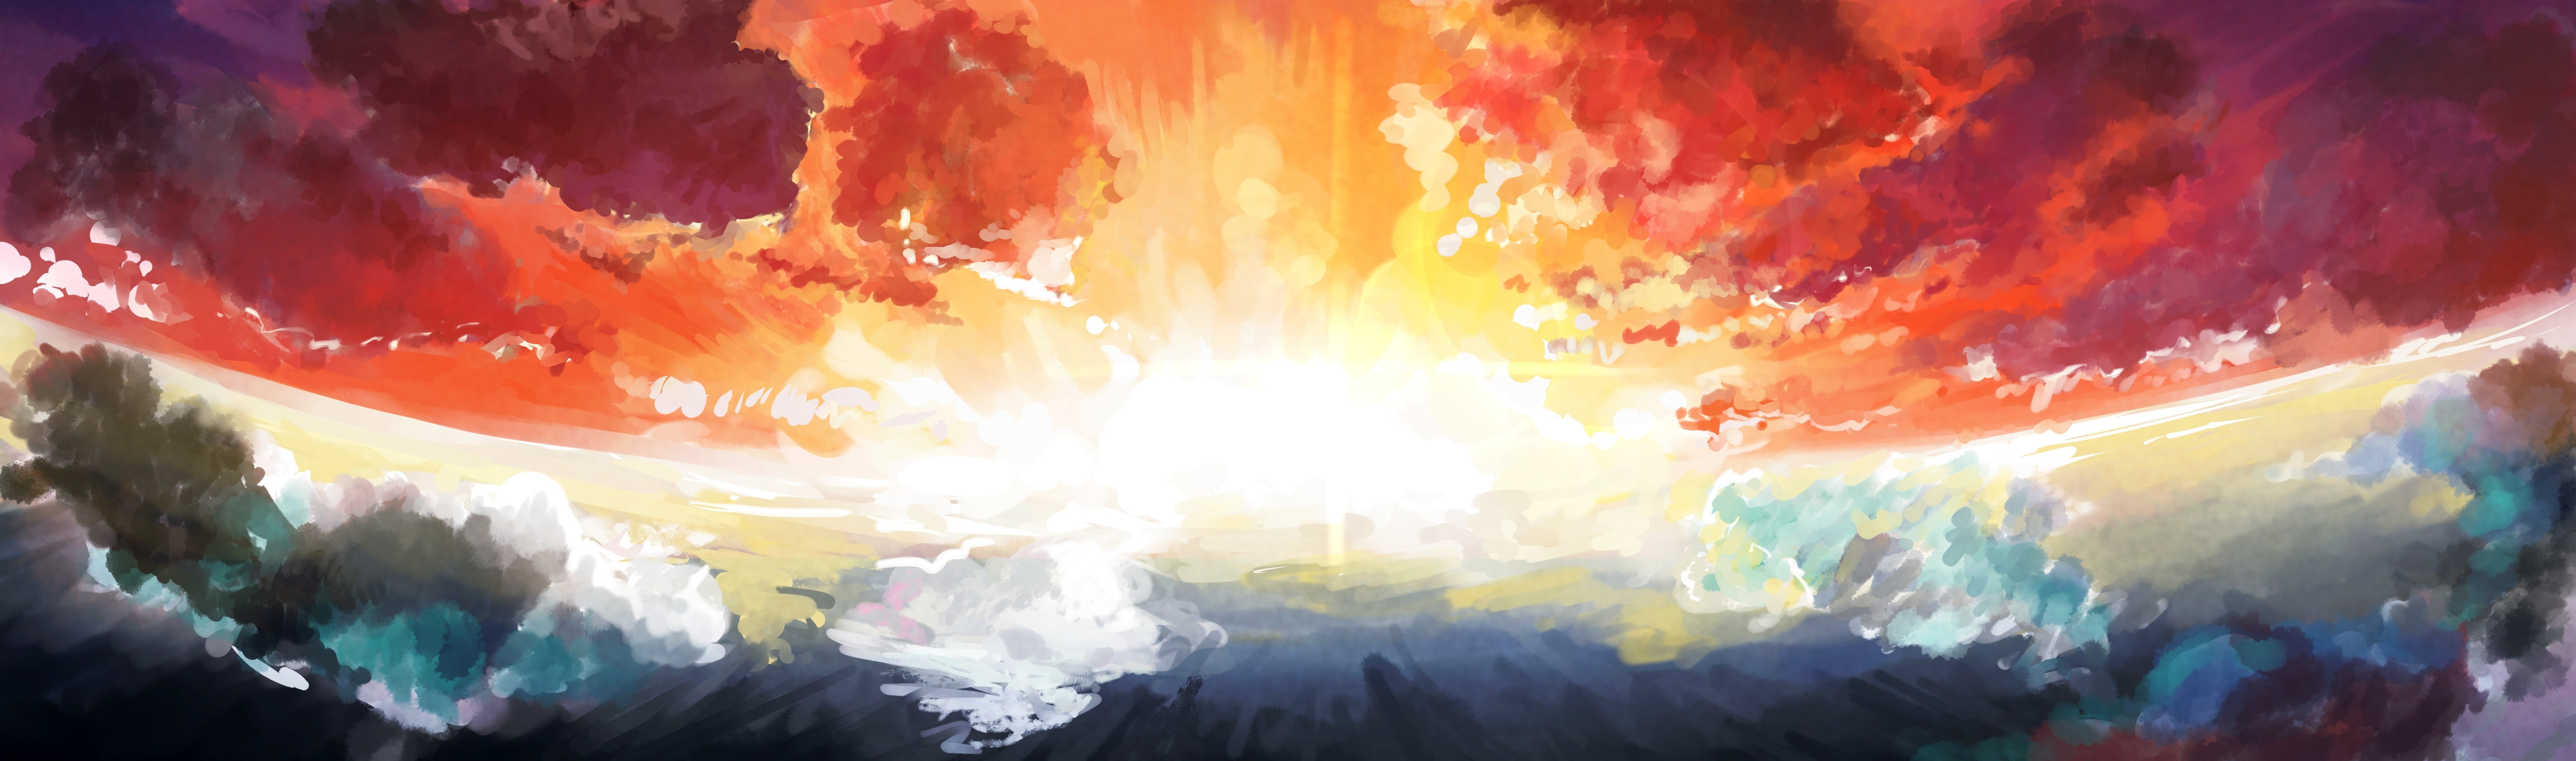 multicolored abstract illustration, sunset, sky, digital art, artwork